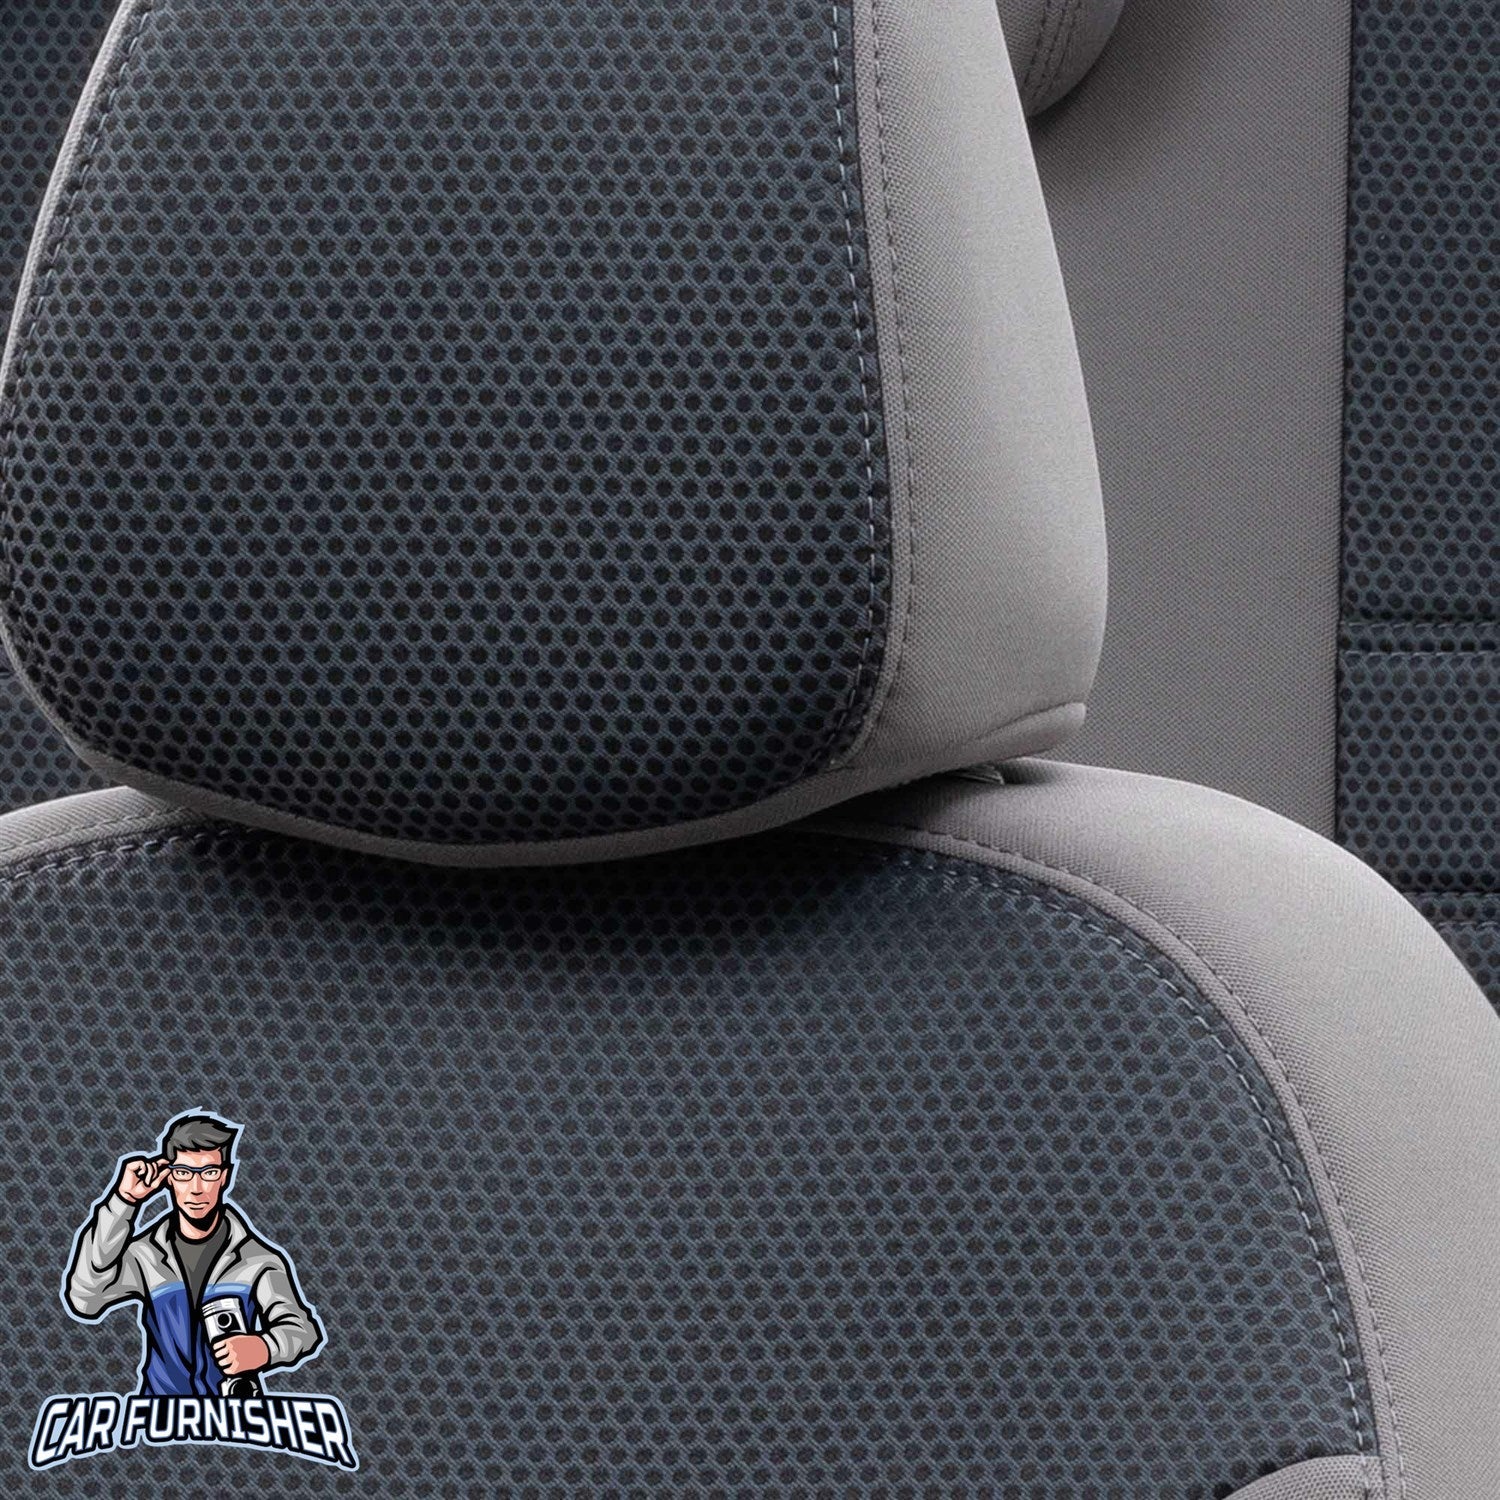 Mazda 6 Seat Covers Original Jacquard Design Smoked Jacquard Fabric